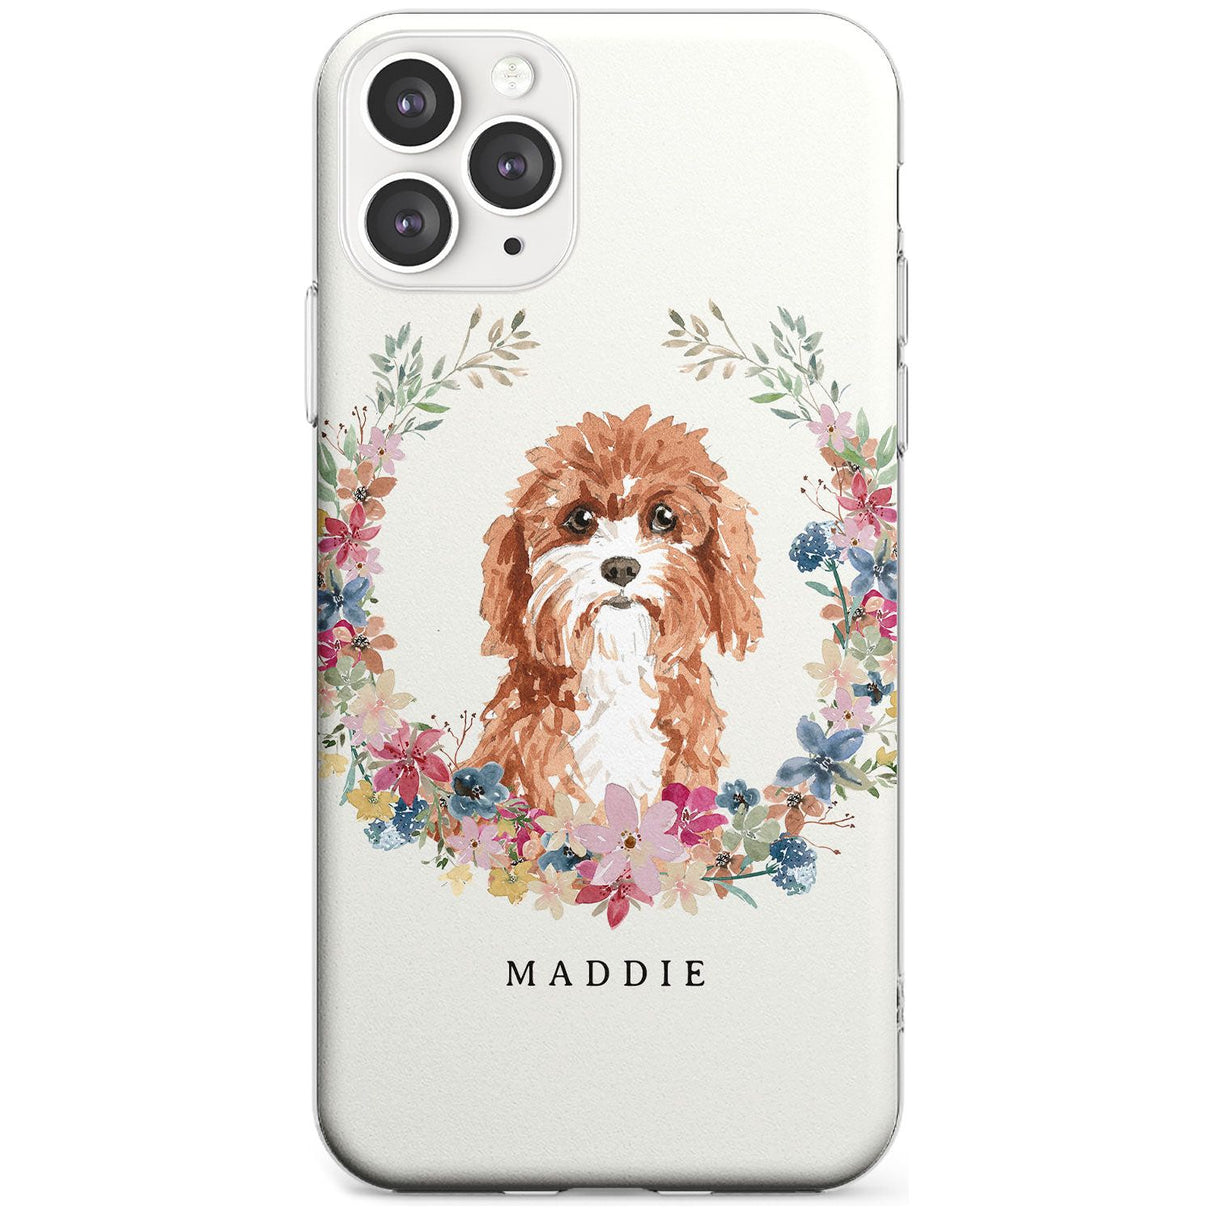 Cavapoo - Watercolour Dog Portrait Slim TPU Phone Case for iPhone 11 Pro Max